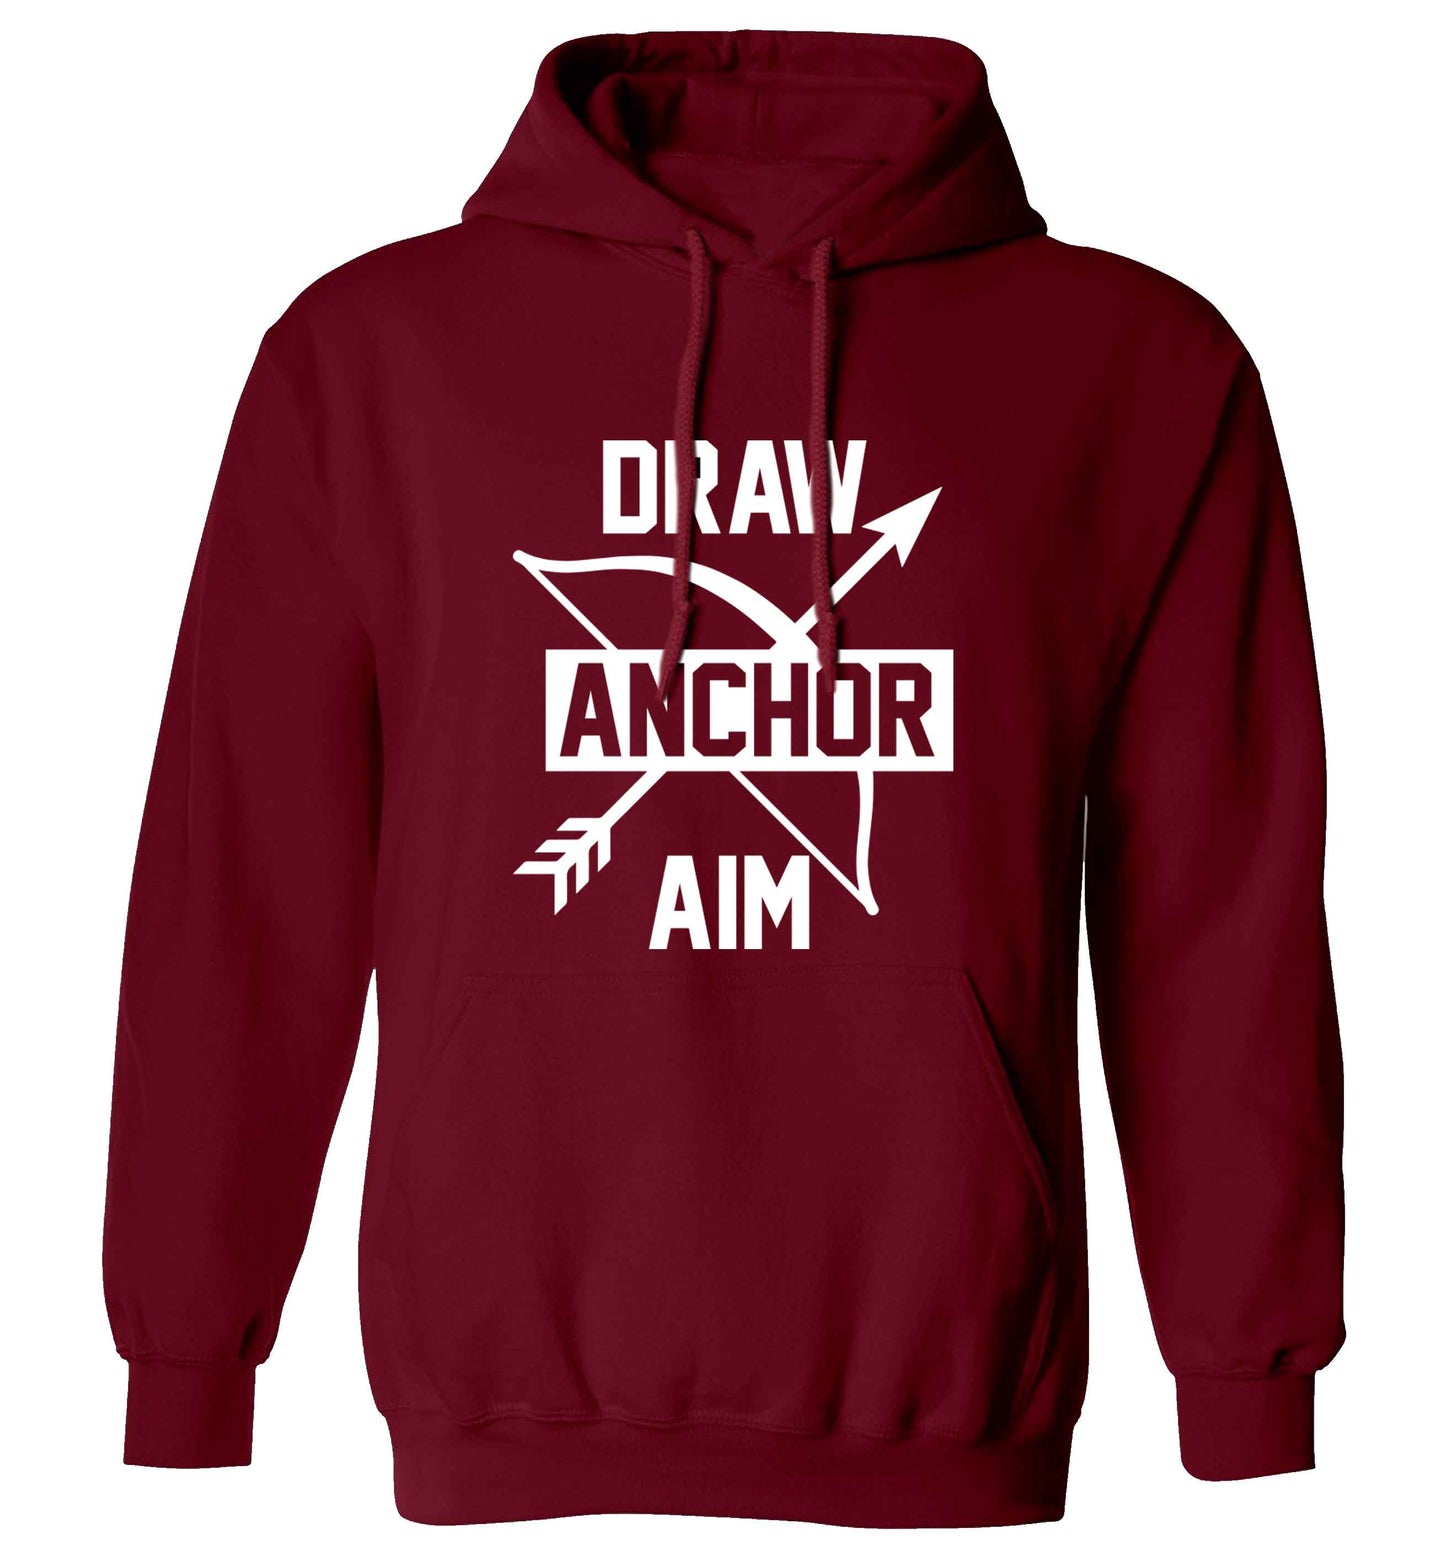 Draw anchor aim adults unisex maroon hoodie 2XL